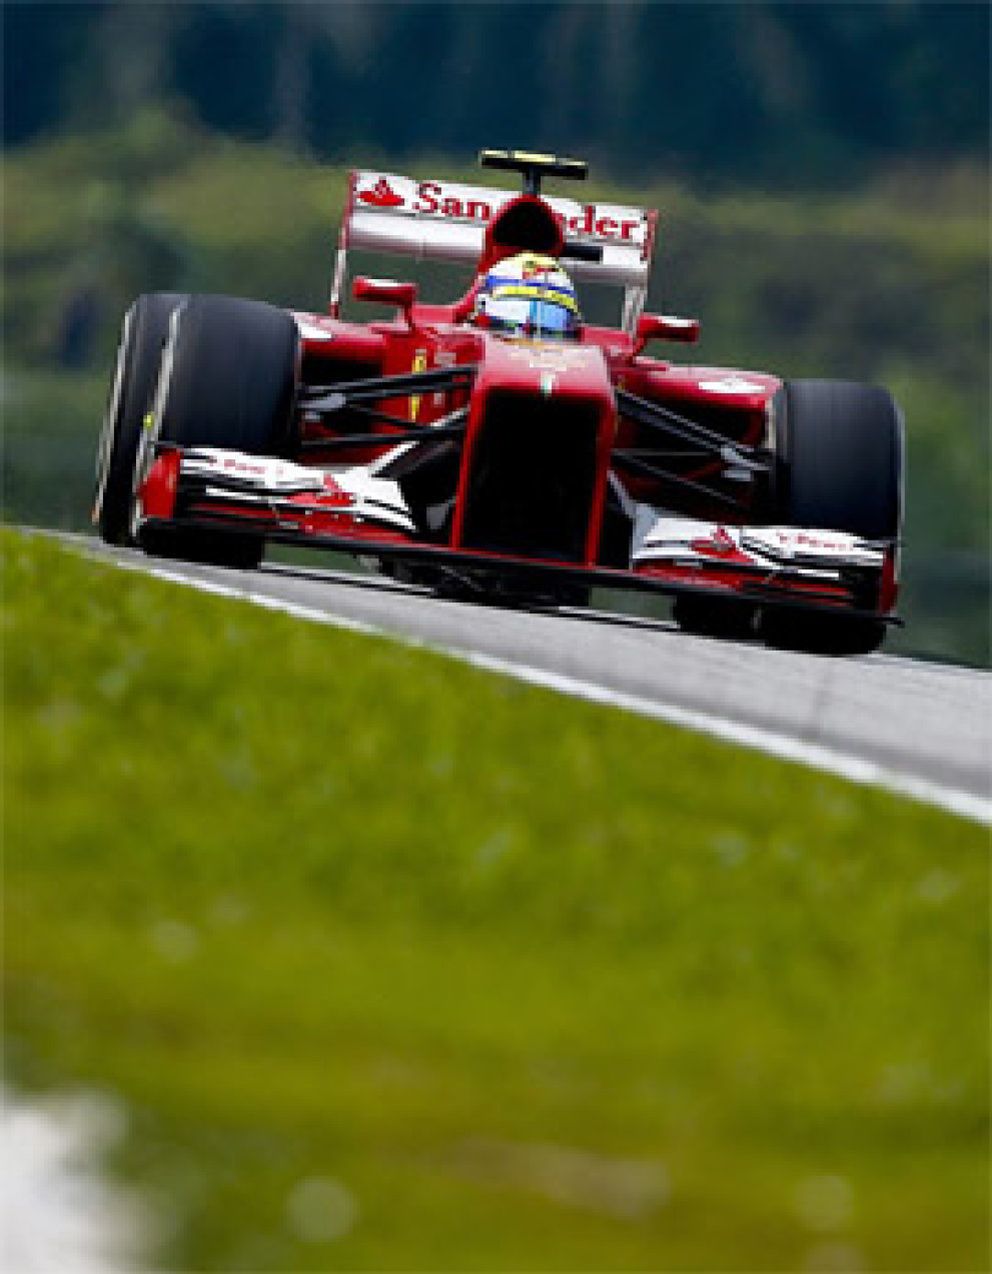 Foto: Ferrari tiene controlado el ritmo de carrera y Pirelli a Red Bull